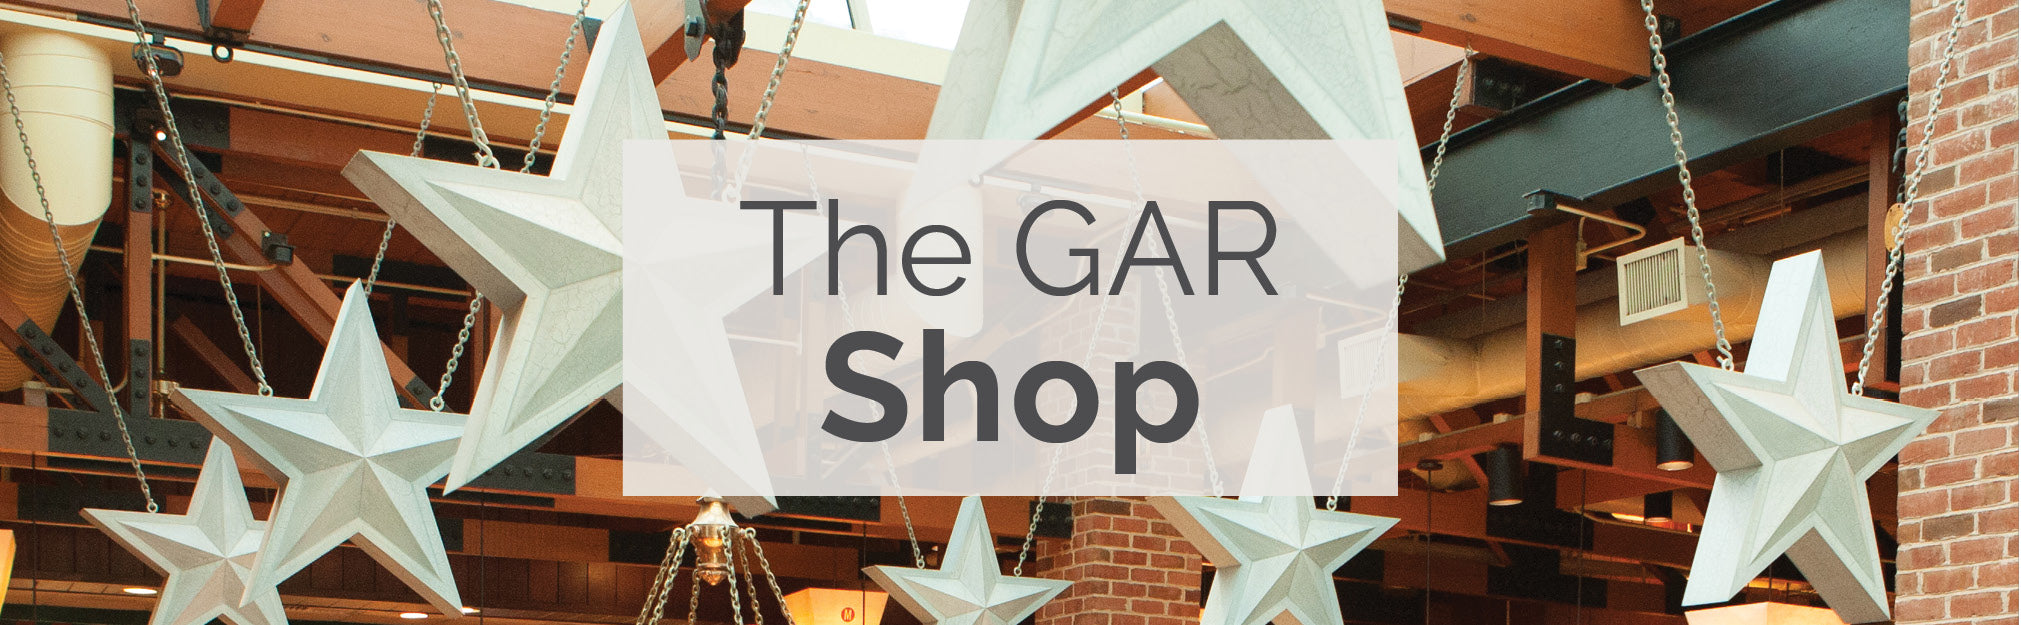 The GAR Shop